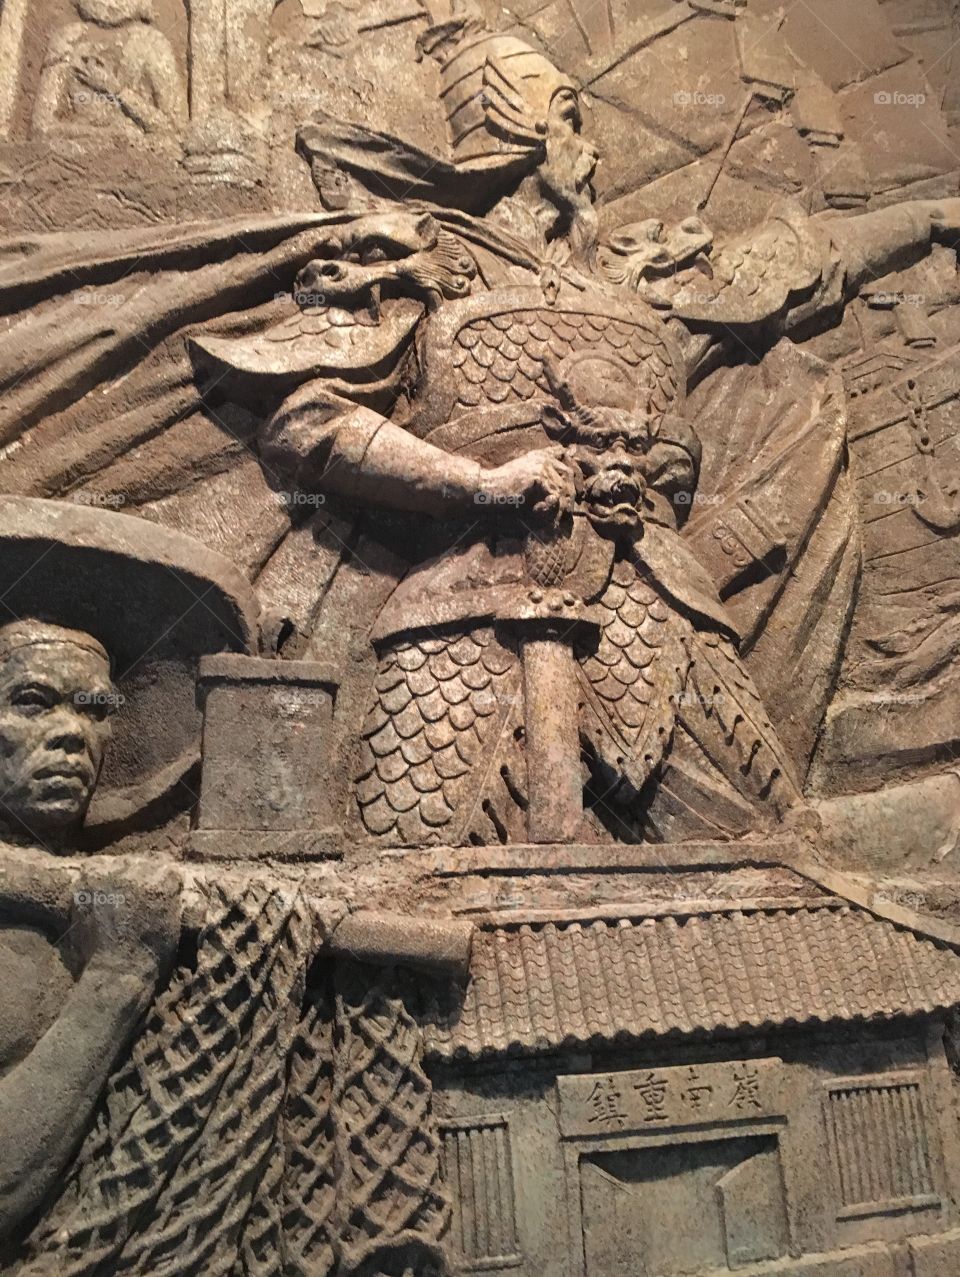 Chinese Warrior Sculpture at Shenzhen Museum - China